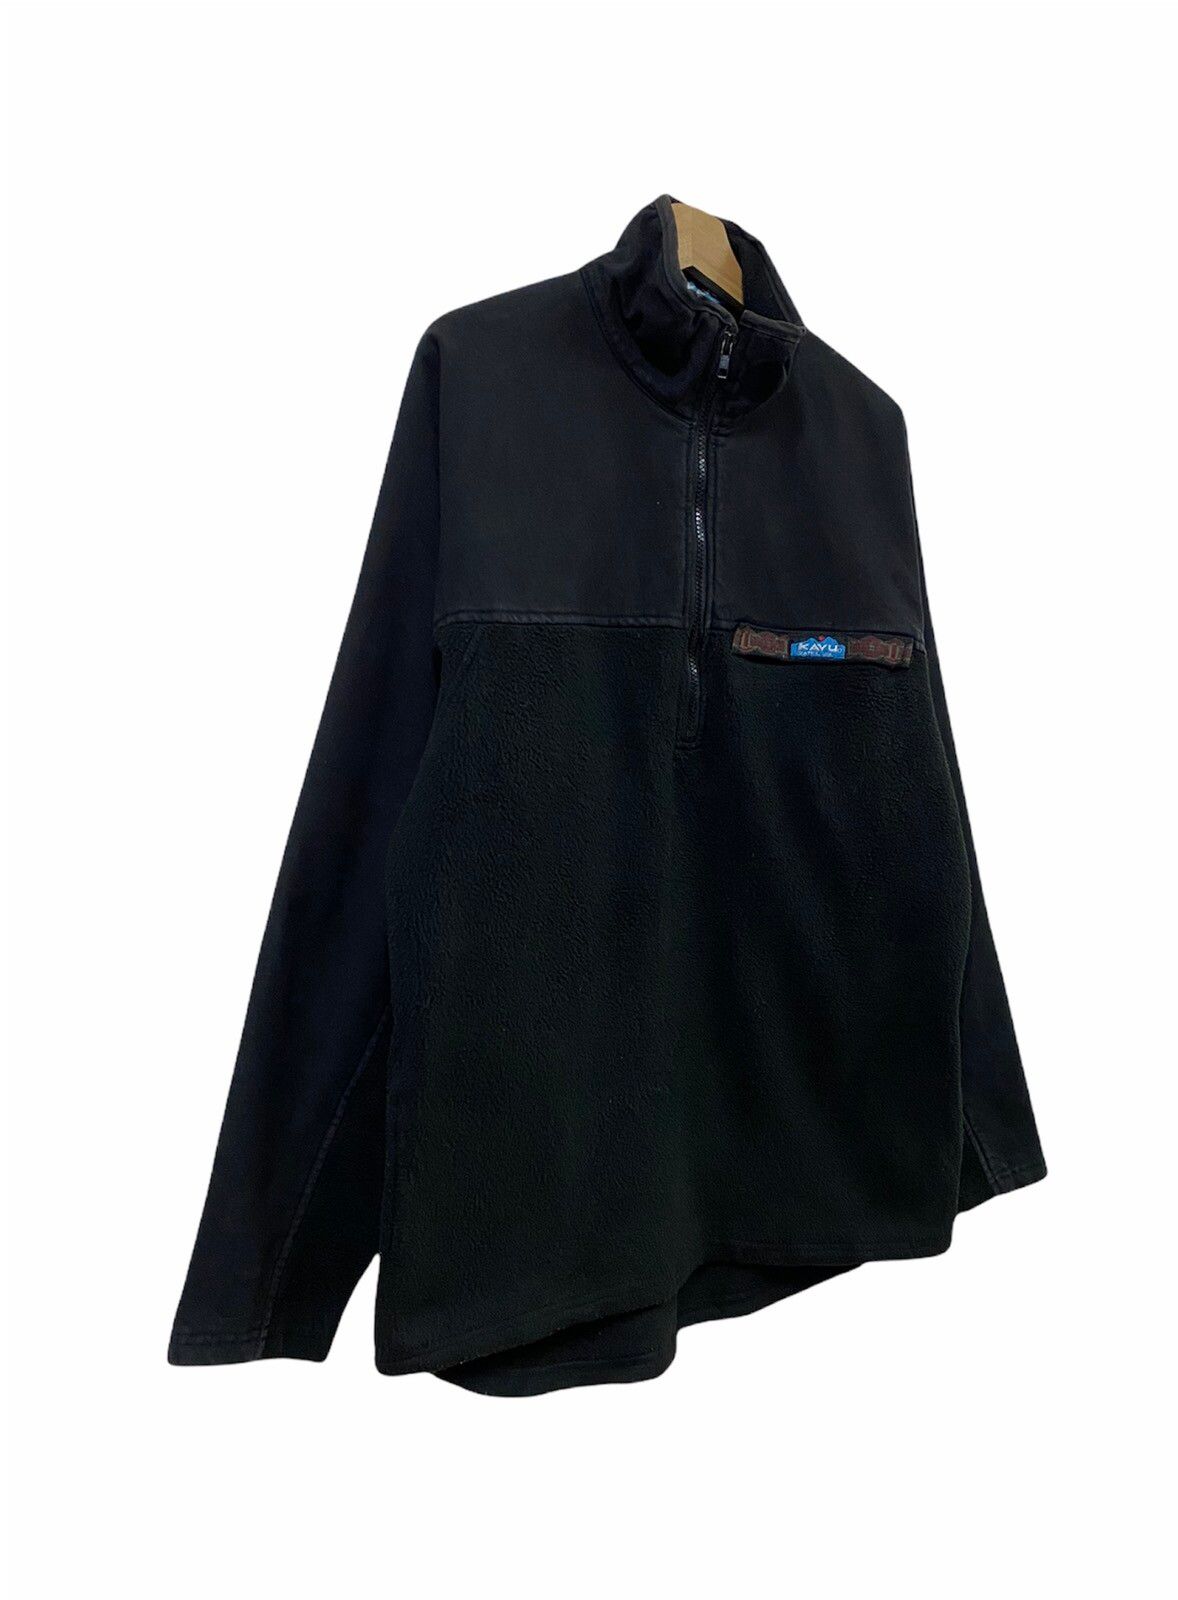 Vtg🔥Kavu Seattle Half Zipper Sportsman Outdoor Jacket Size M - 9